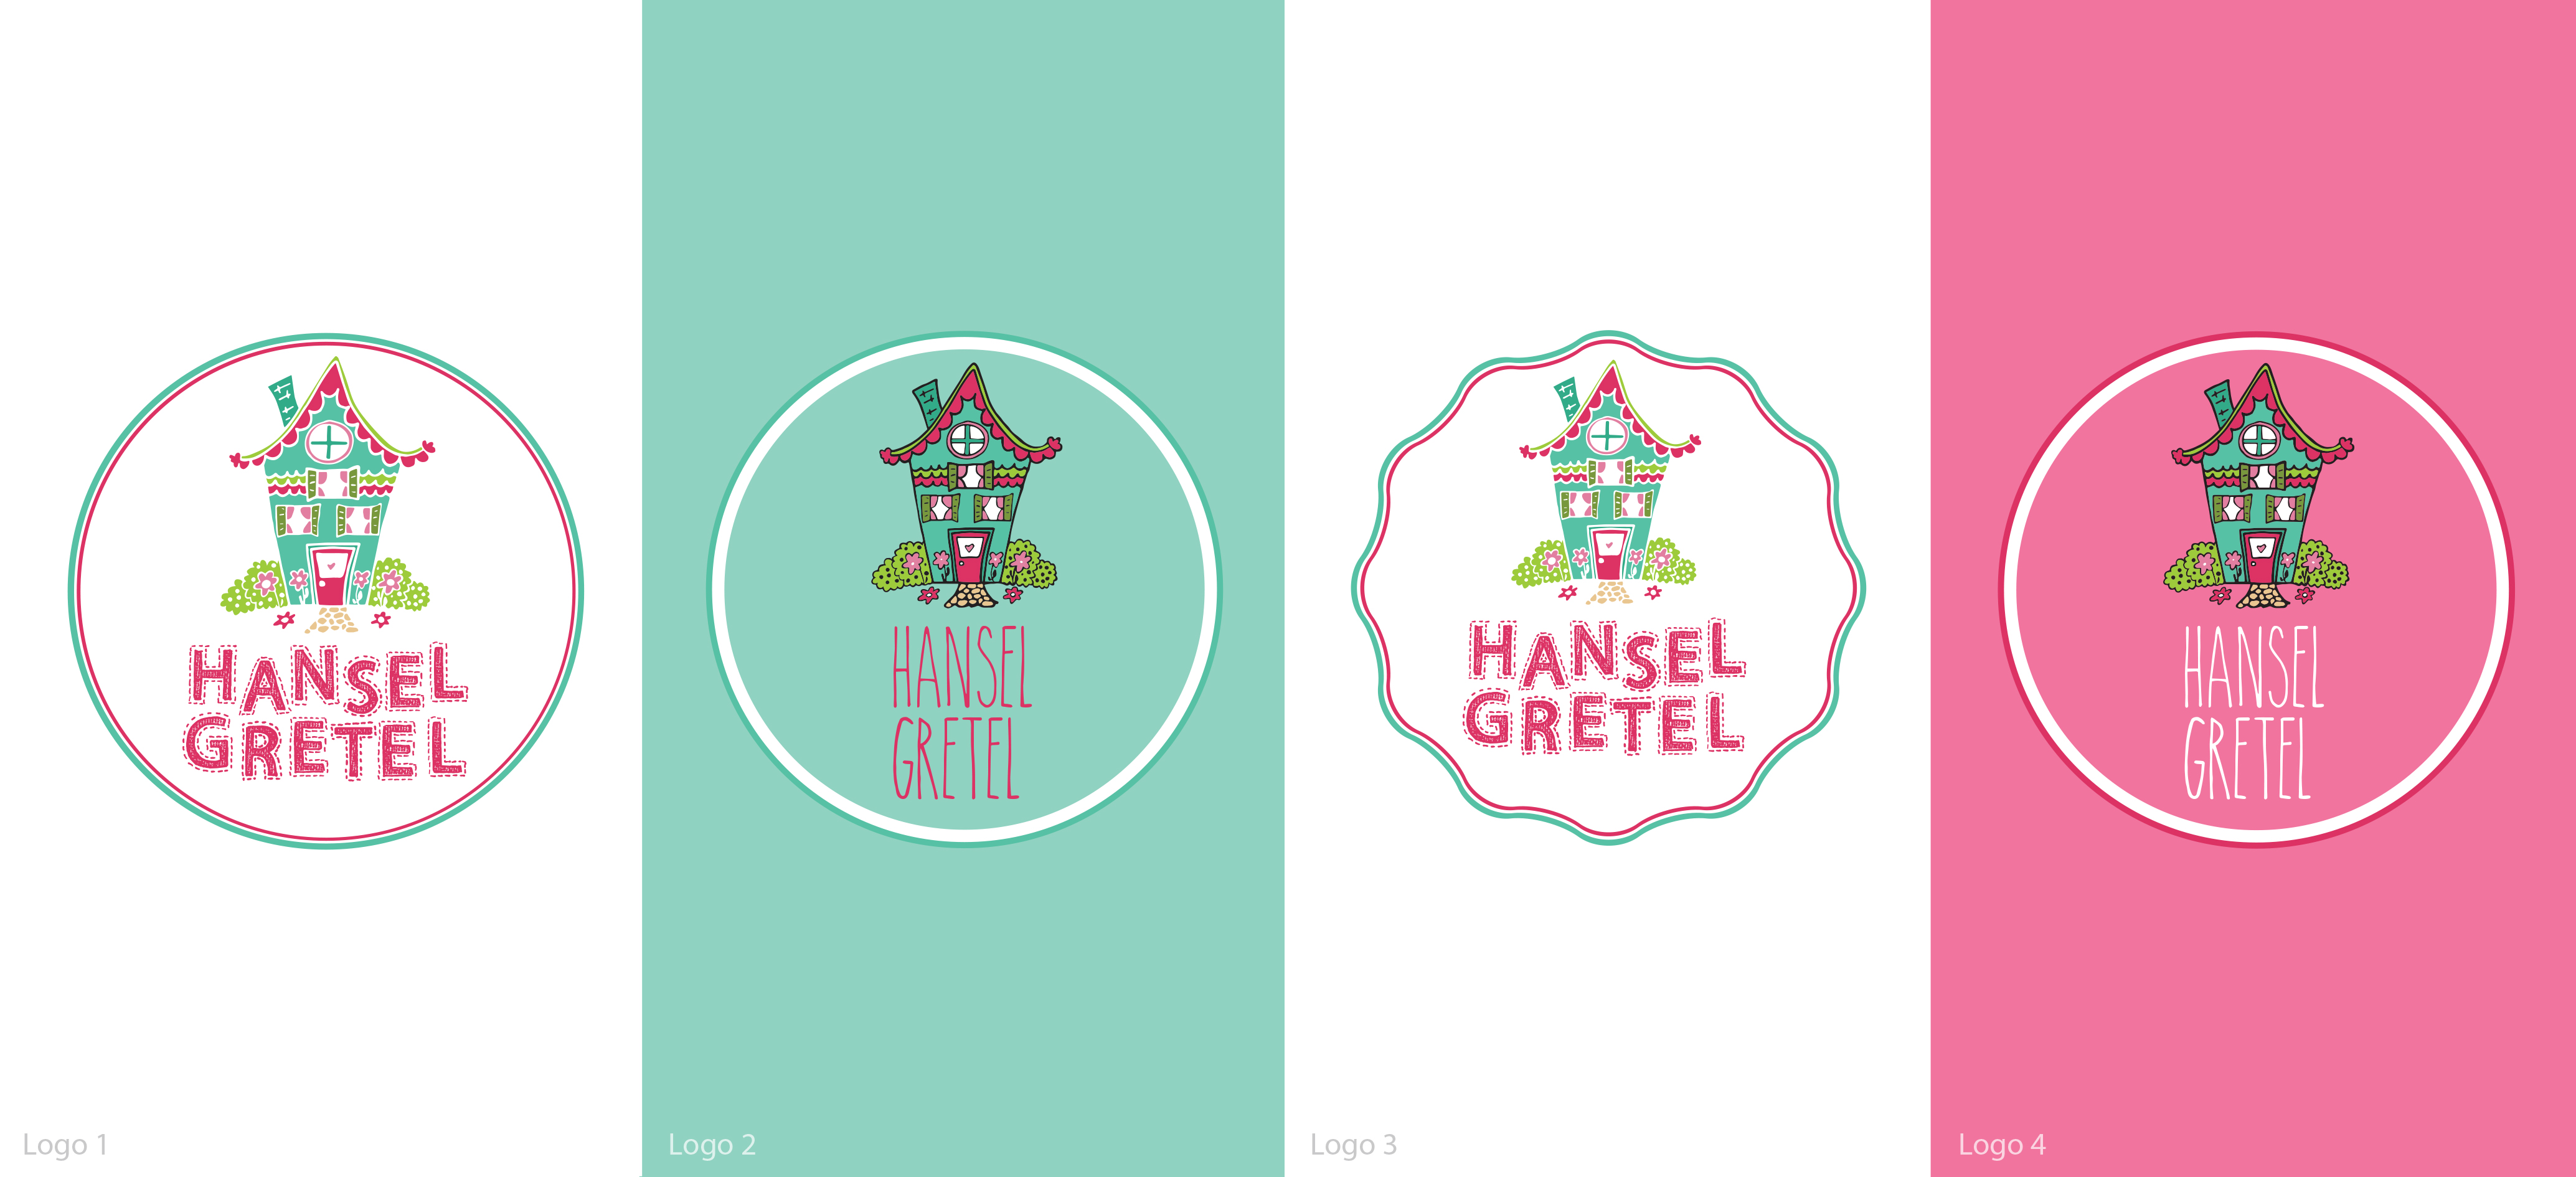 ‘Hansel Gretel’ Logo Design4137 x 1890